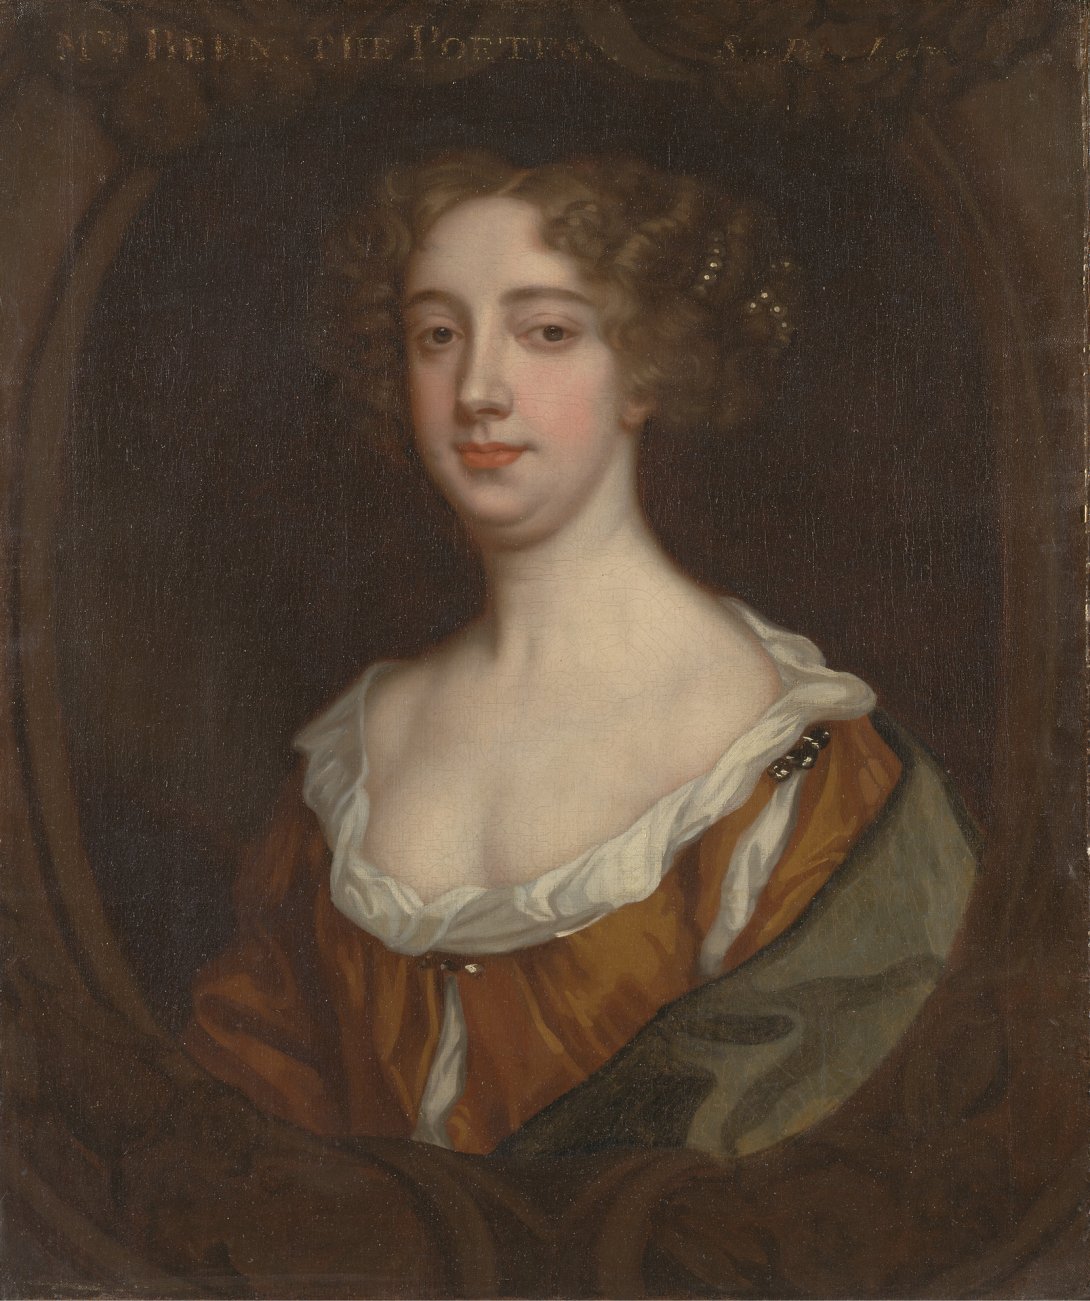 Portrait of a woman in 17th-century dress set in an oval 